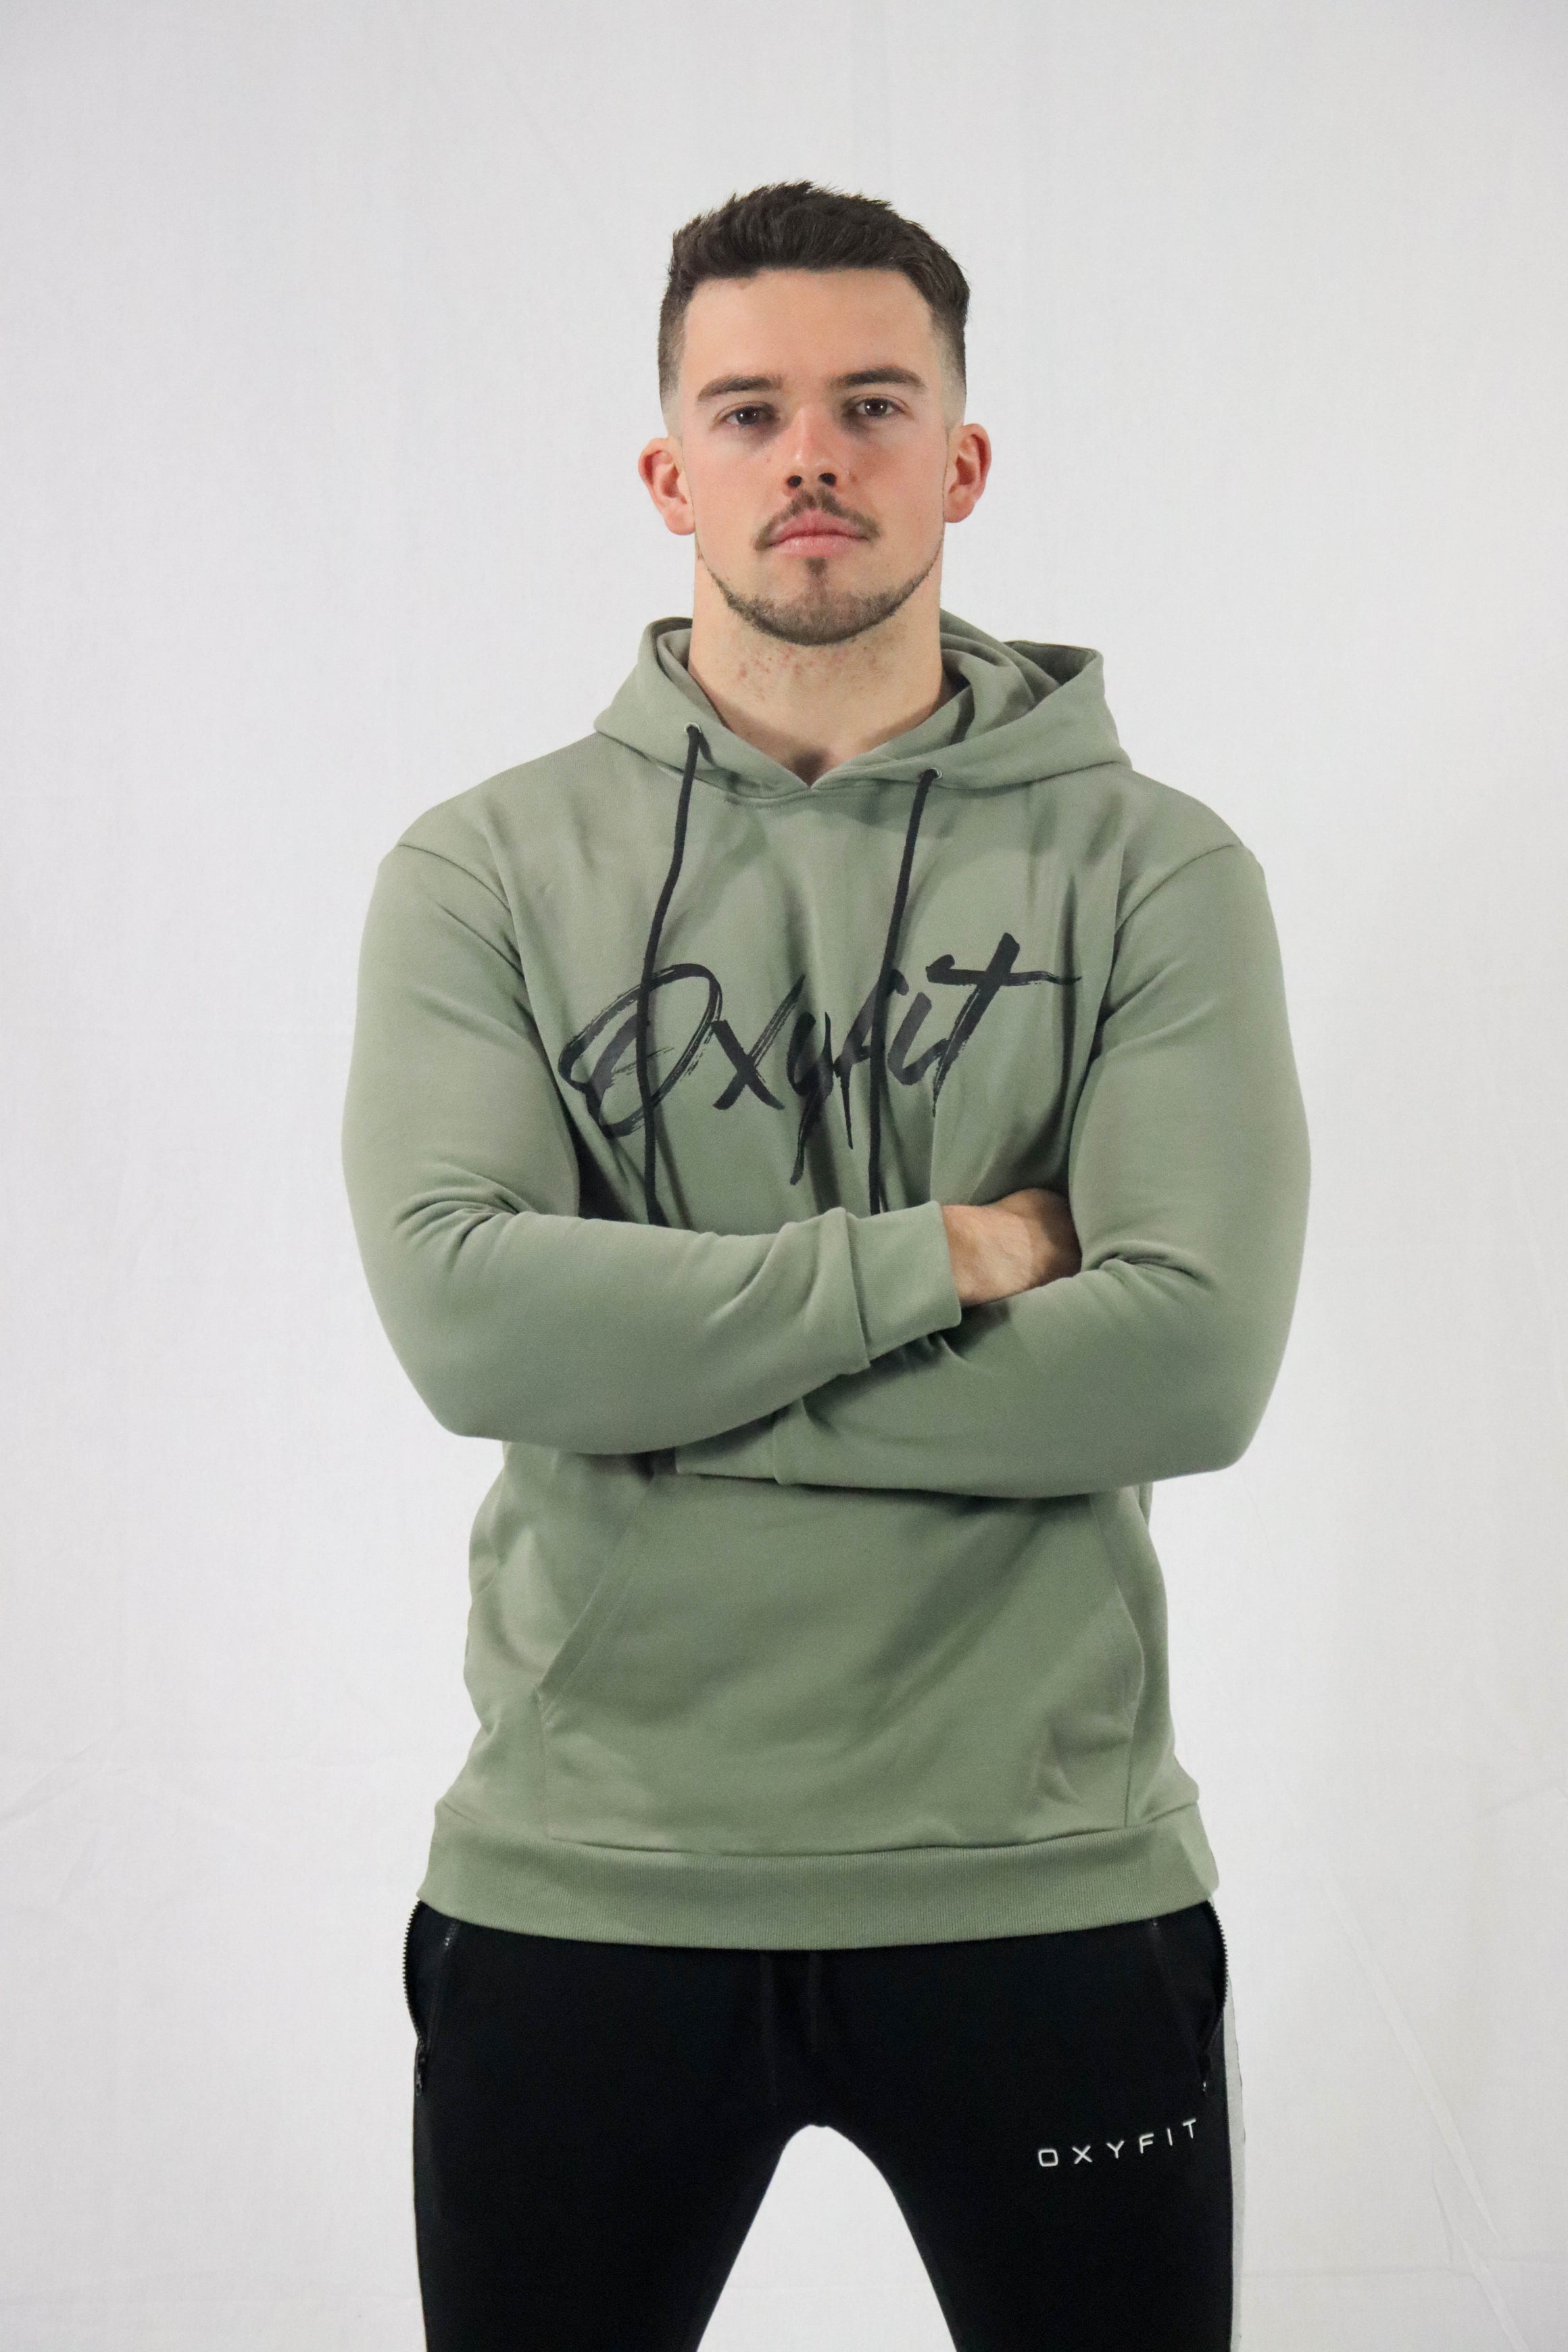 NZ Muscle Pullover Hoodie : Stylish new Hooded Sweatshirt : NZ